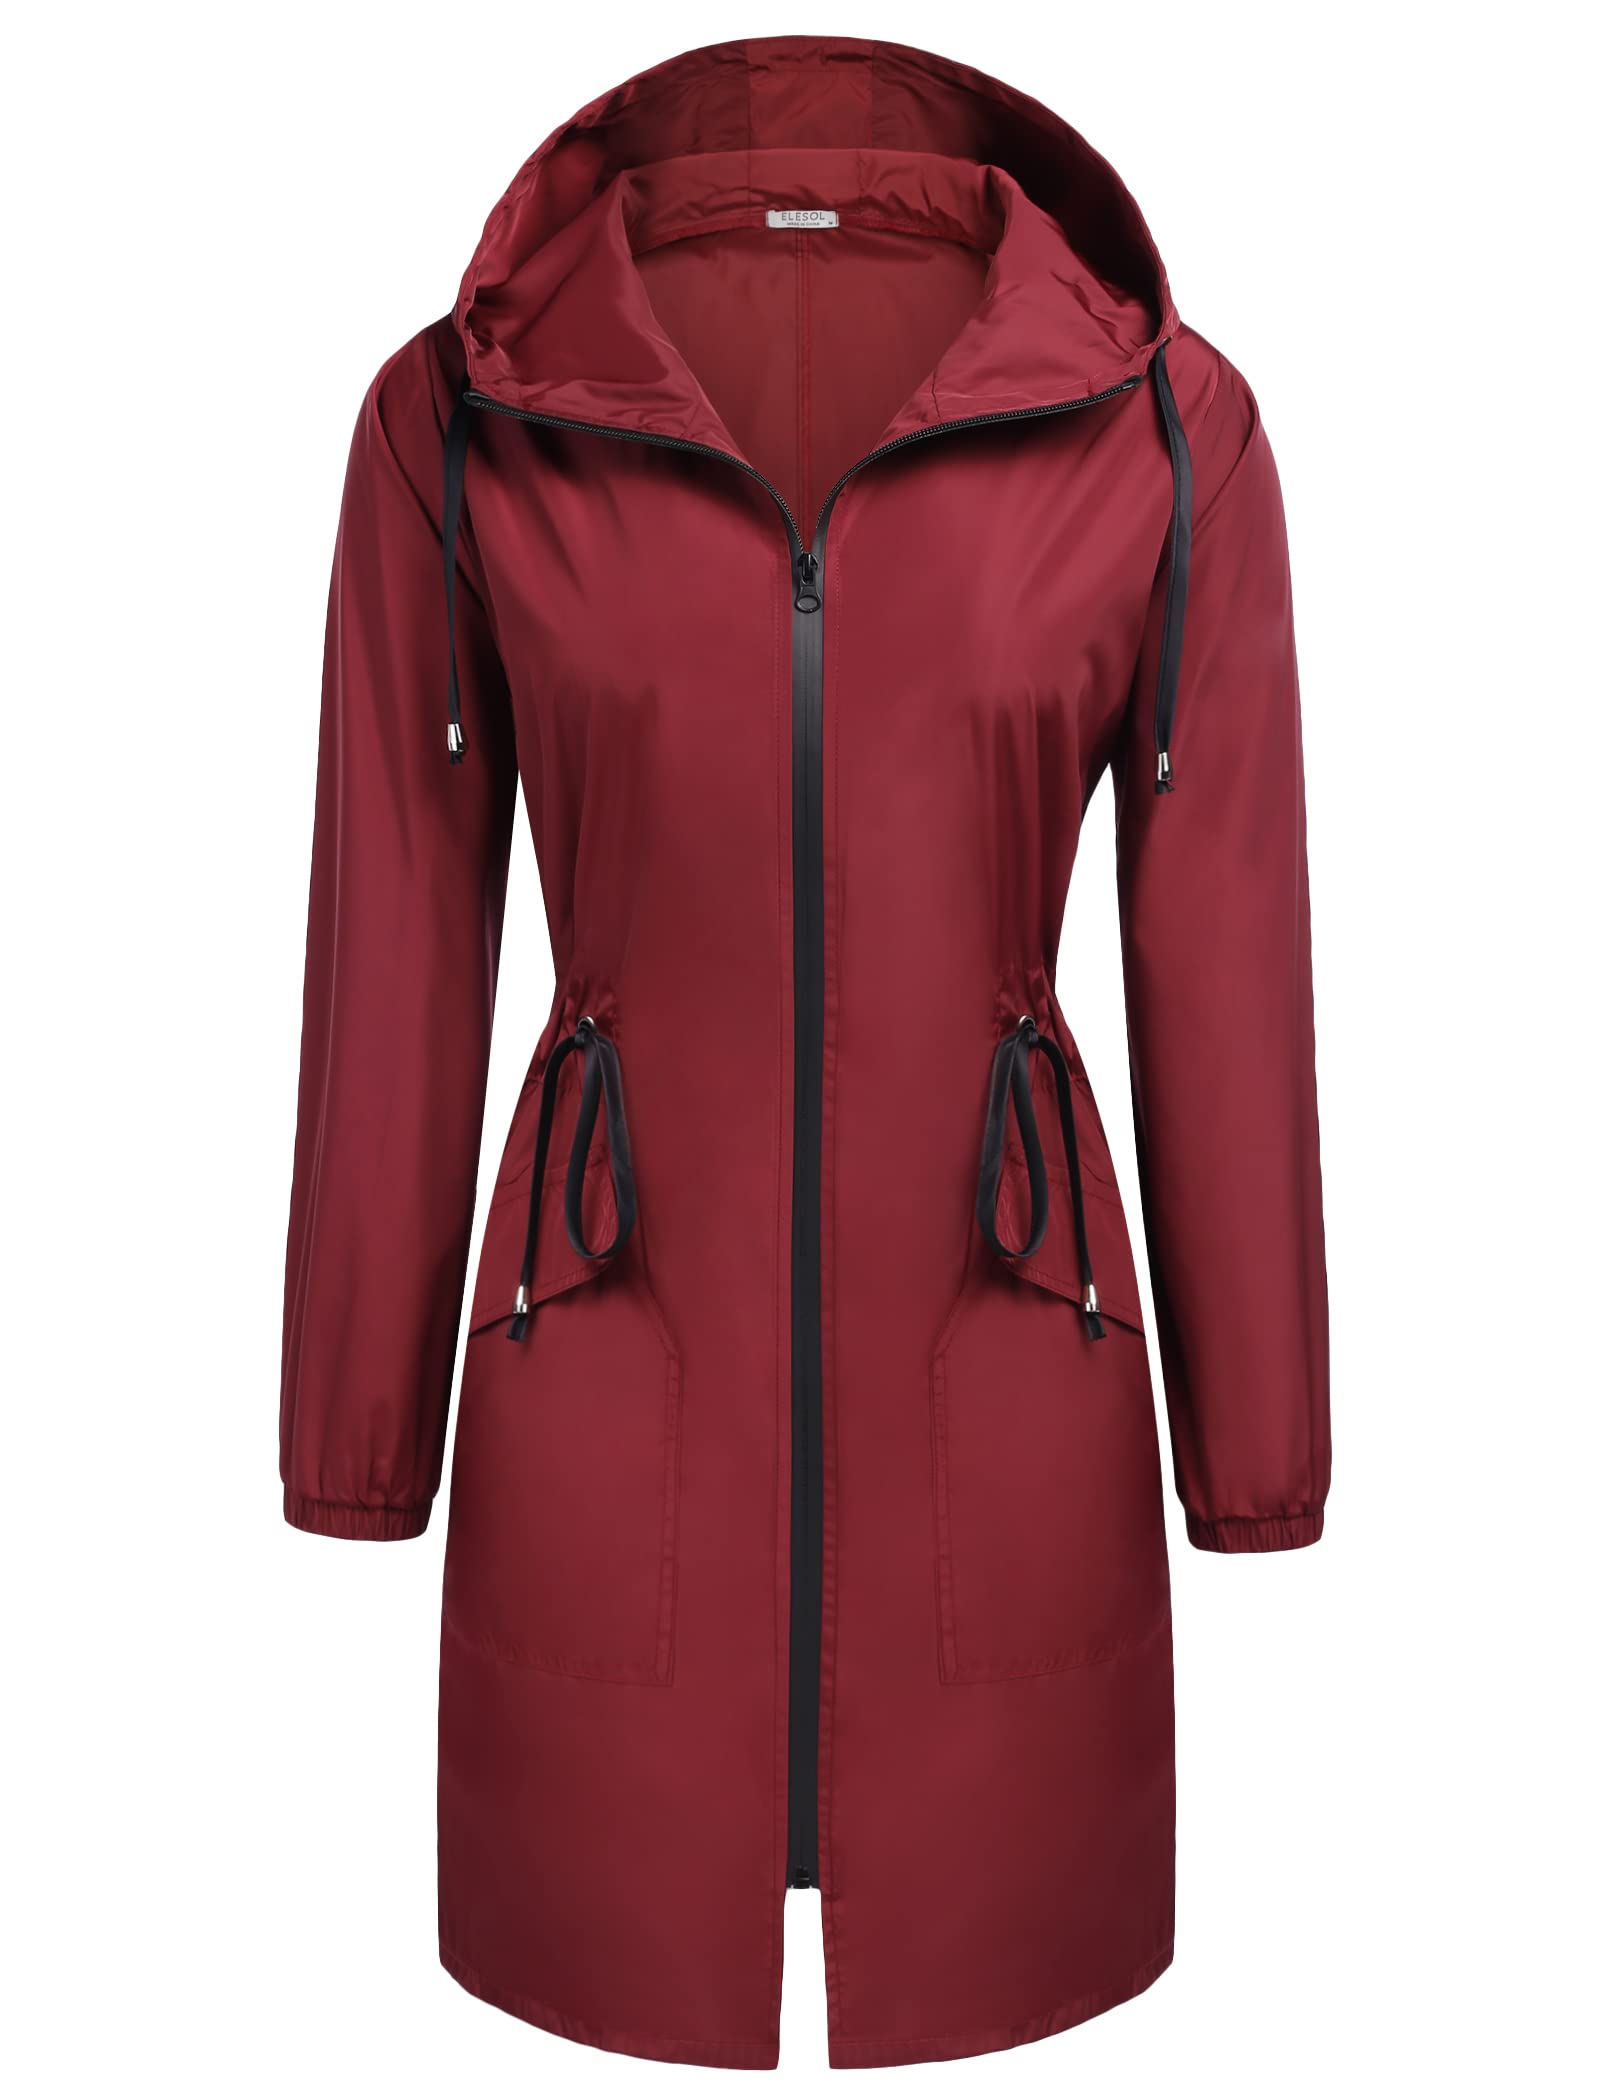 ELESOL Women Rain Jacket Zip Waterproof Packable Windbreaker Long Raincoat Trench coat